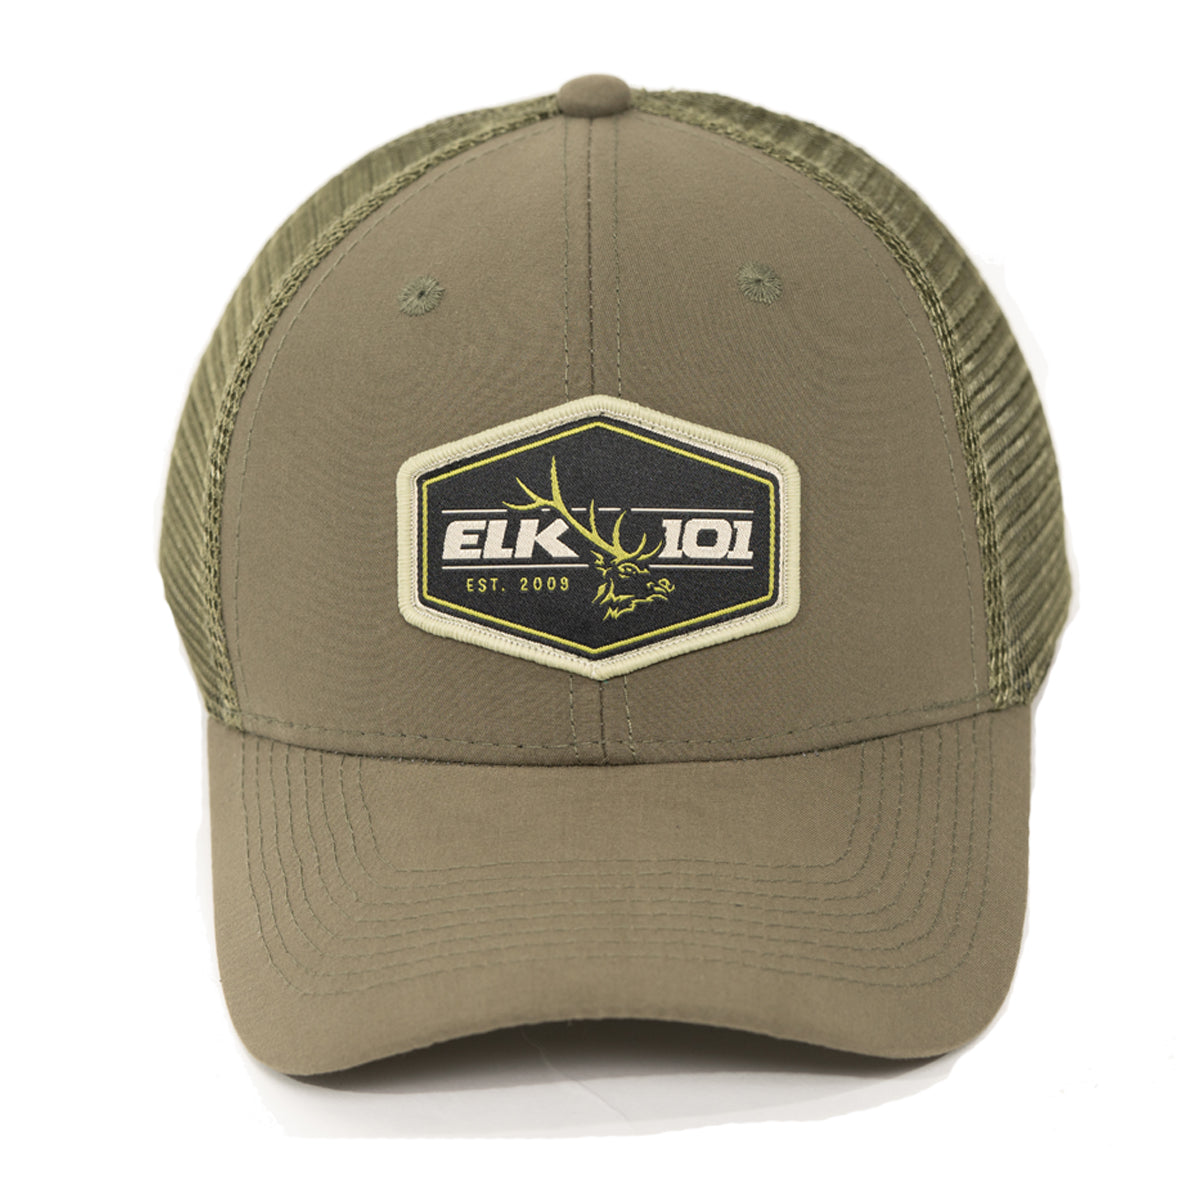 Elk101 Green Mist Trucker Hat